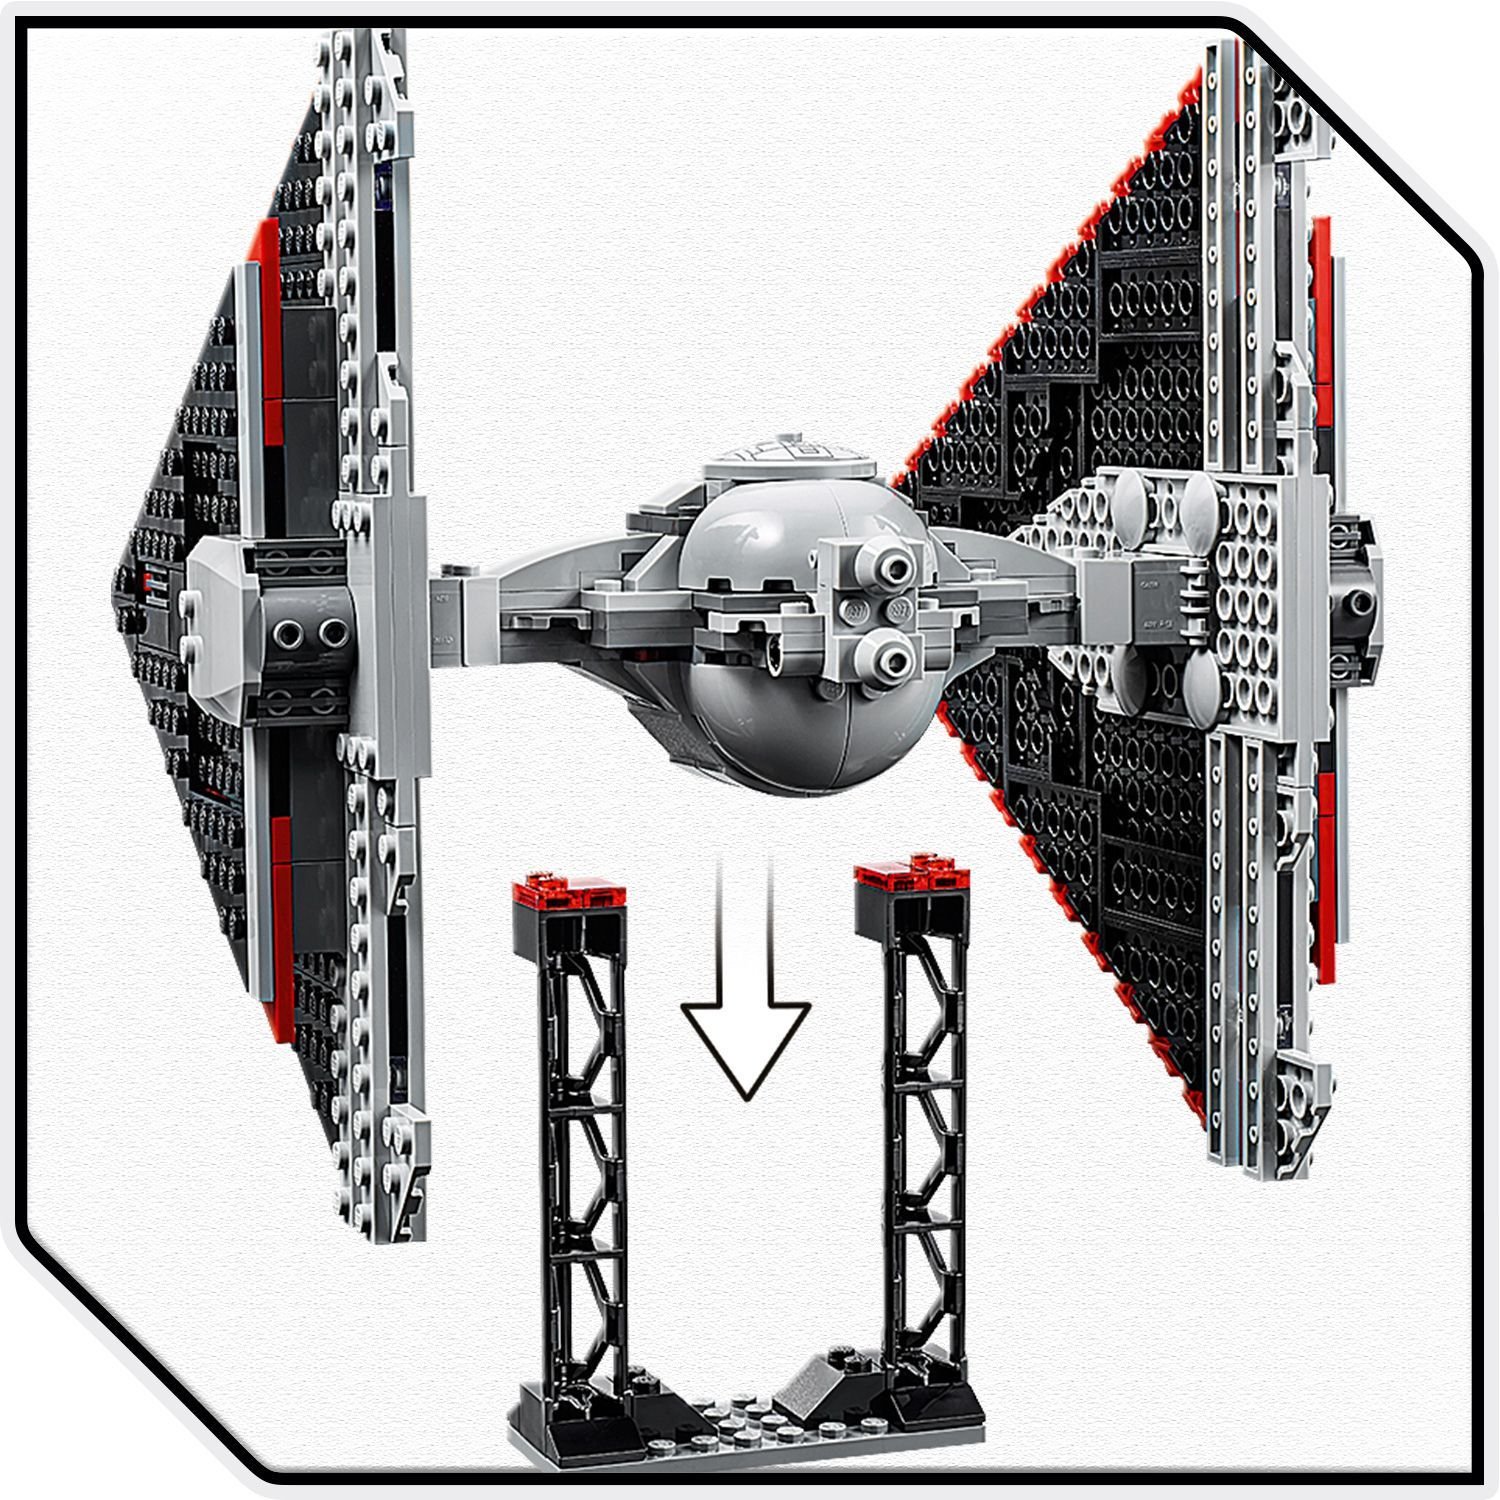 Lego Star Wars 75272 Истребитель СИД ситхов